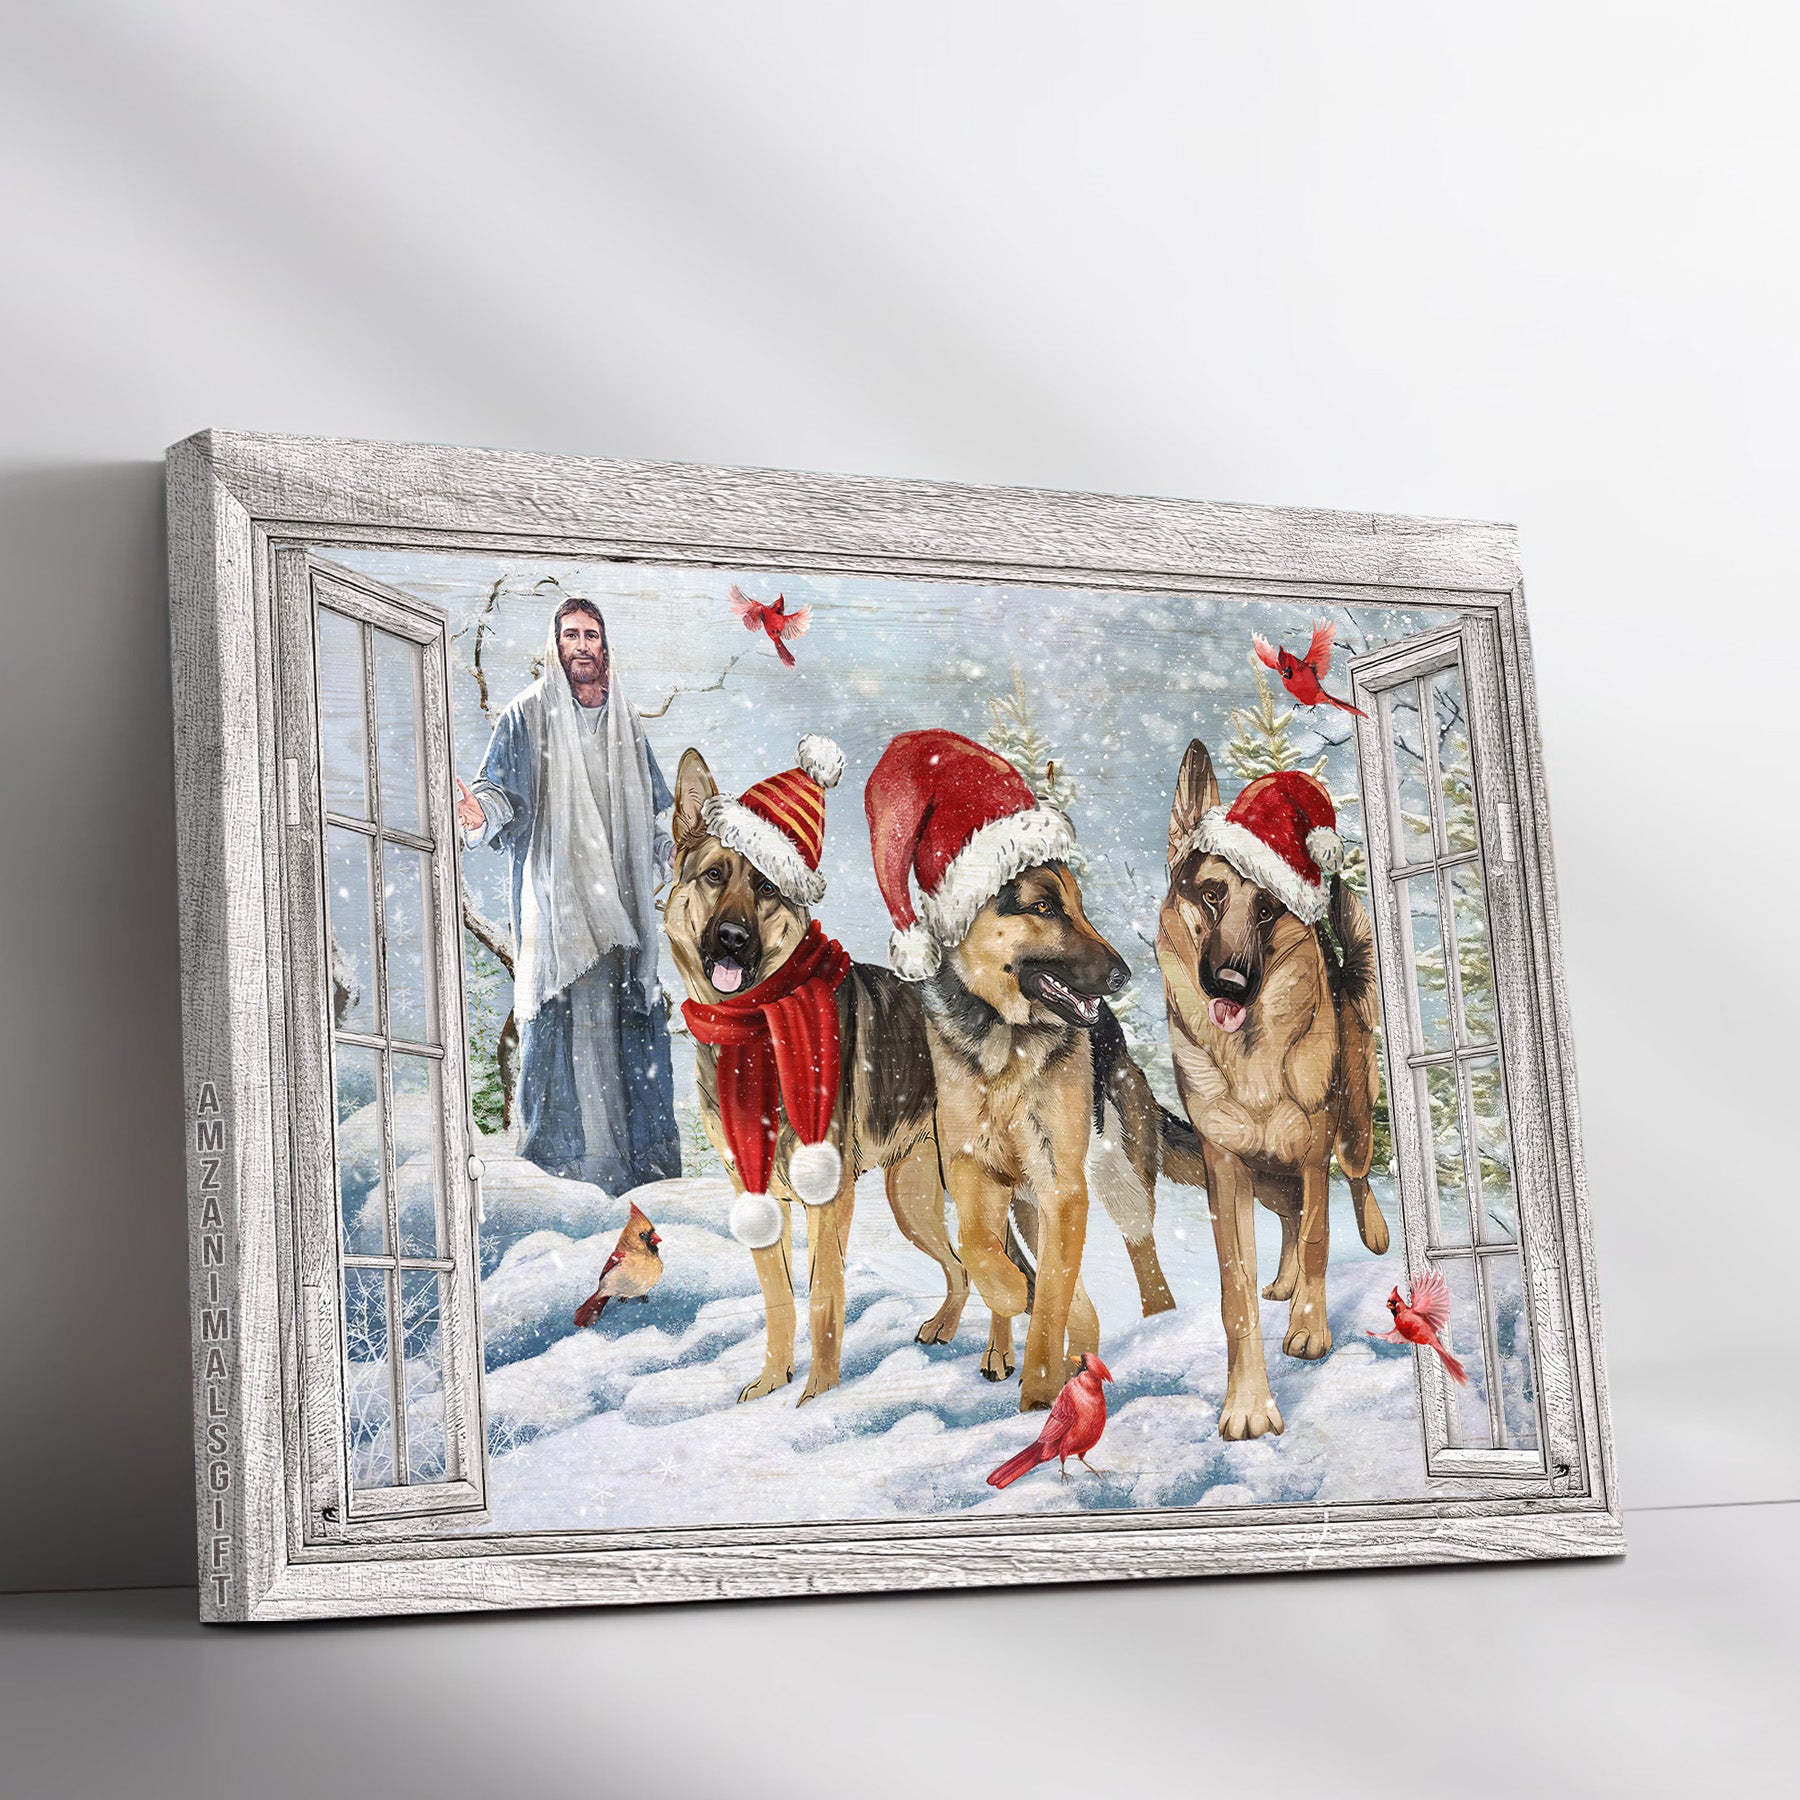 German Shepherd & Jesus Premium Wrapped Landscape Canvas - Christmas Hat, German Shepherd Dogs, Jesus Painting, Red Cardinal - Gift For Christian